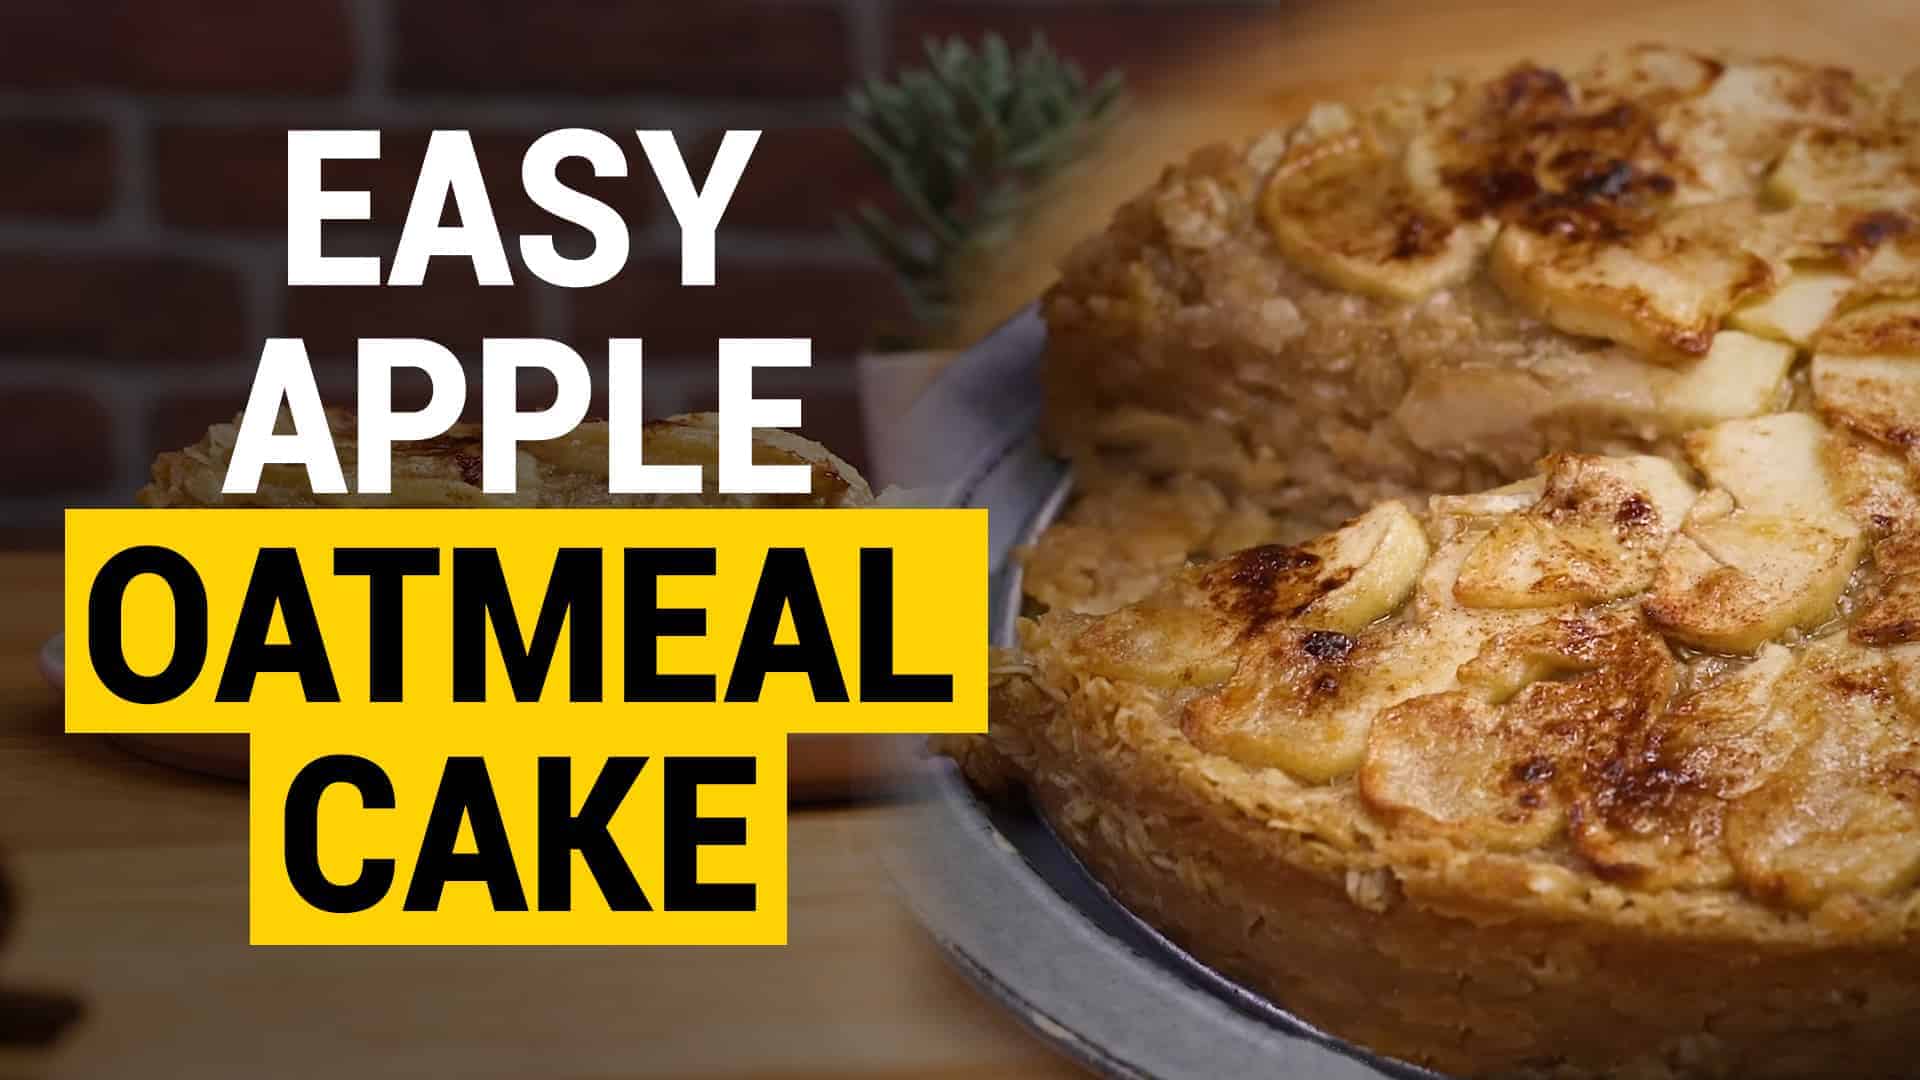 How to Make an Easy Apple Oatmeal Cake